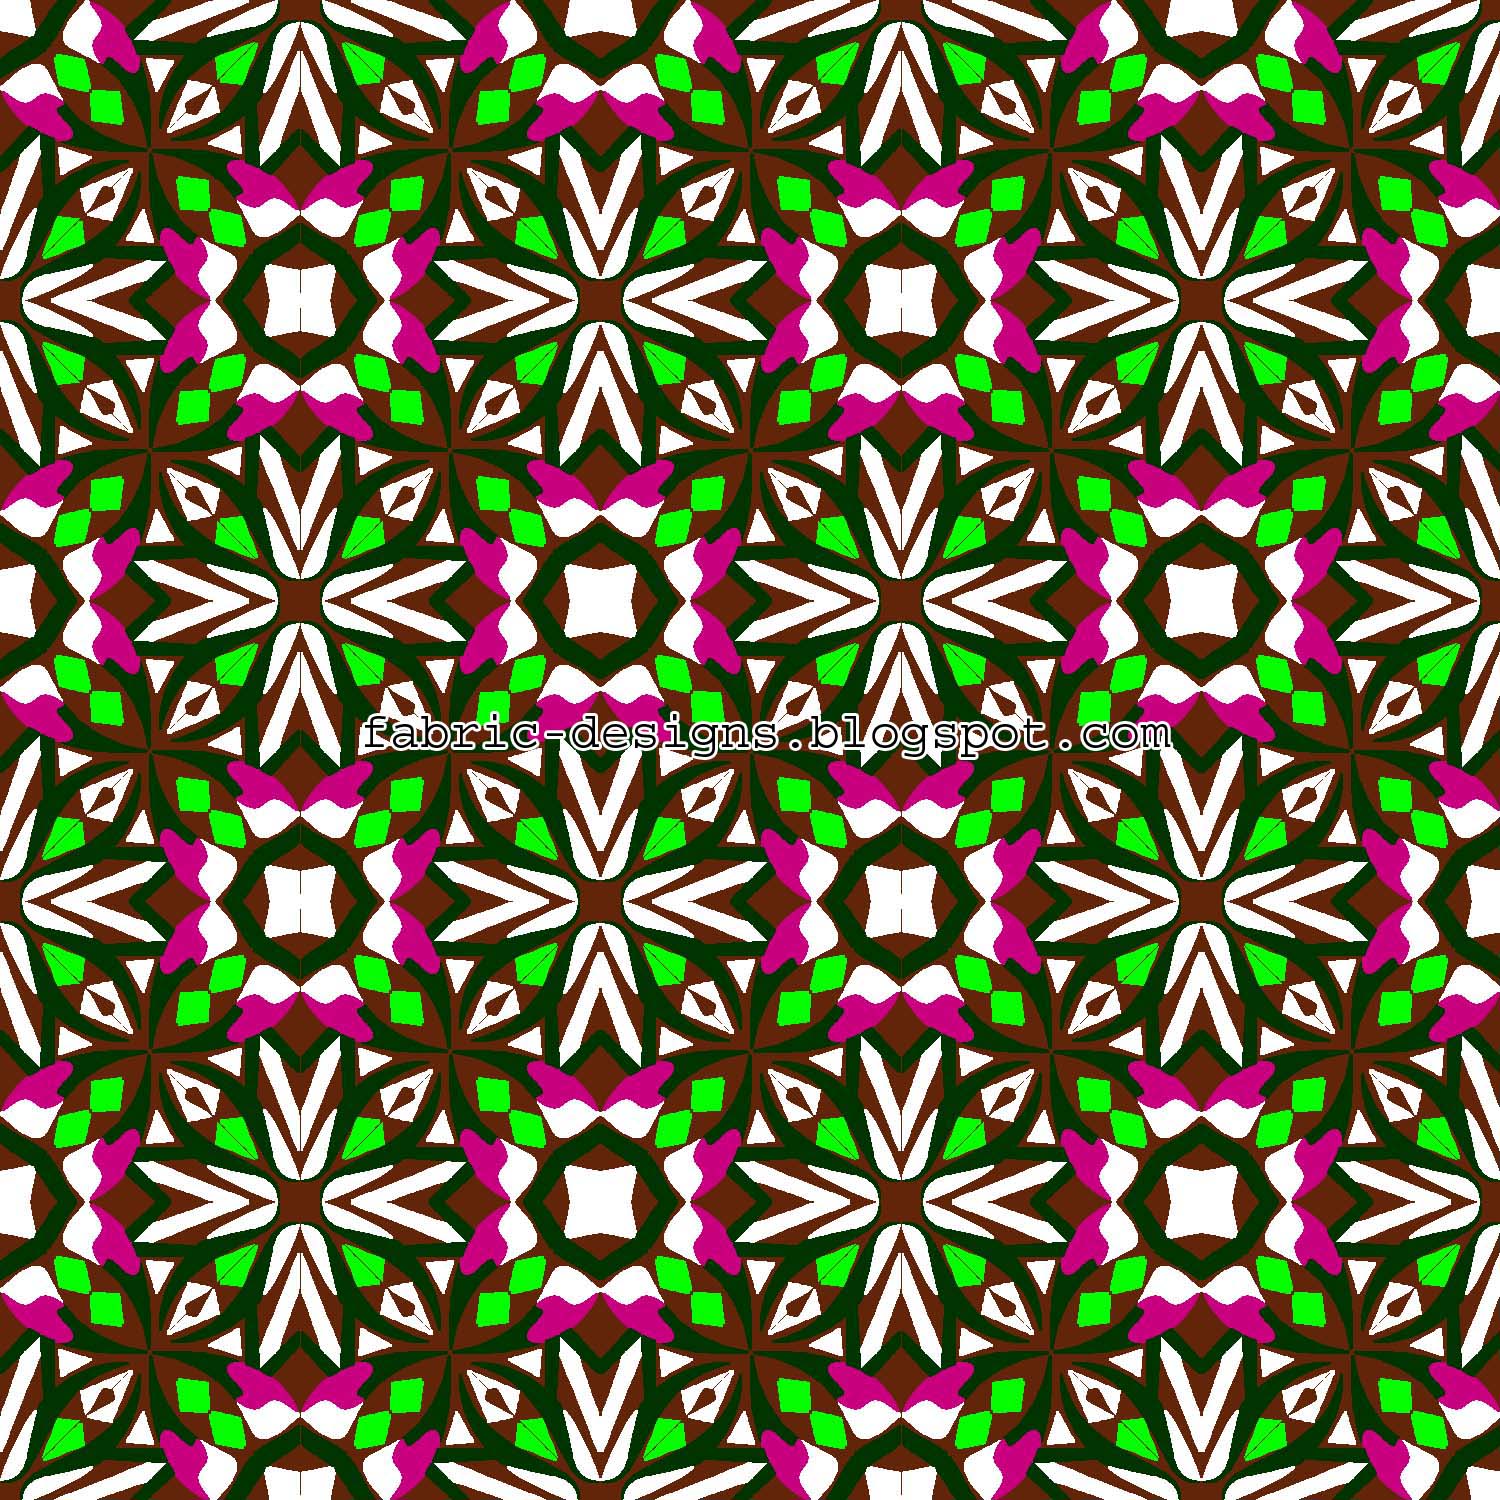 Source URL: http://kootation.com/fabric-patterns-paisley-vector ...